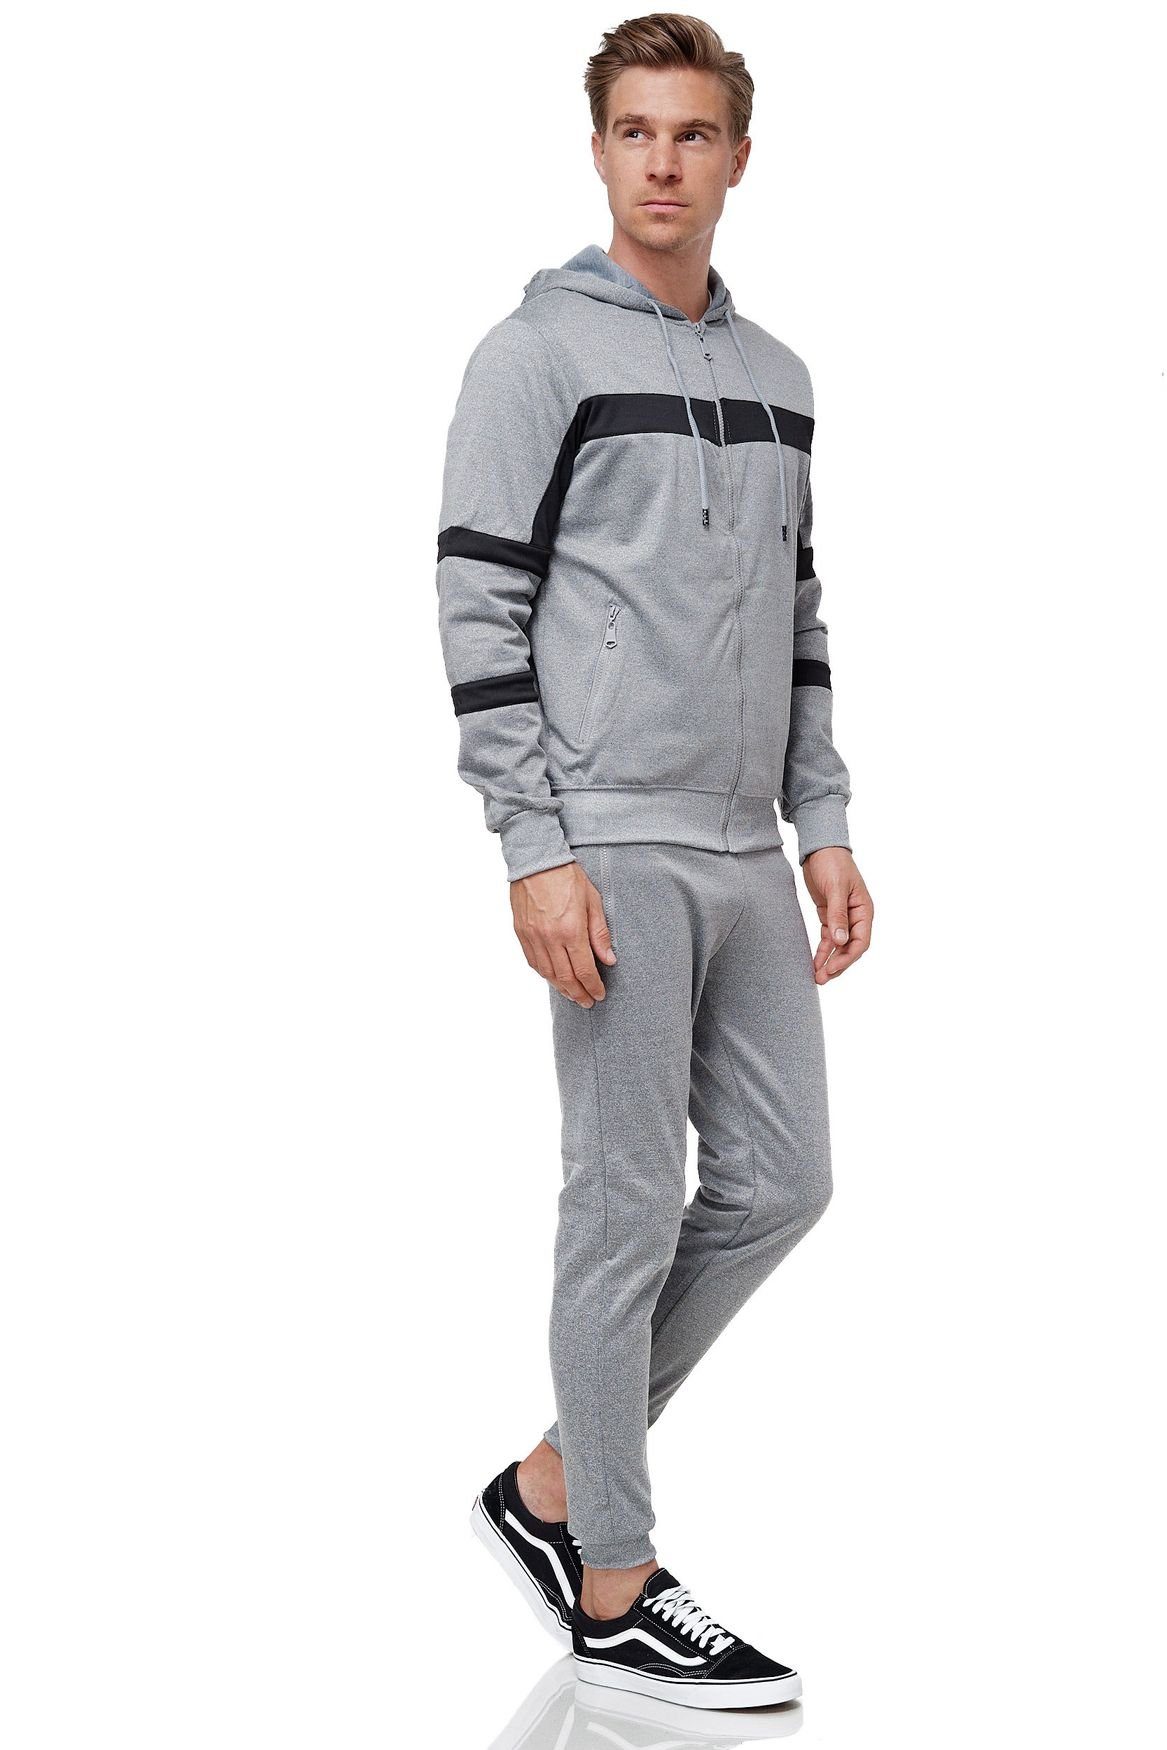 Herren Trainingsanzug Basic Casual Jogging Hose Streifen Anzug Kapuzen Sweater 